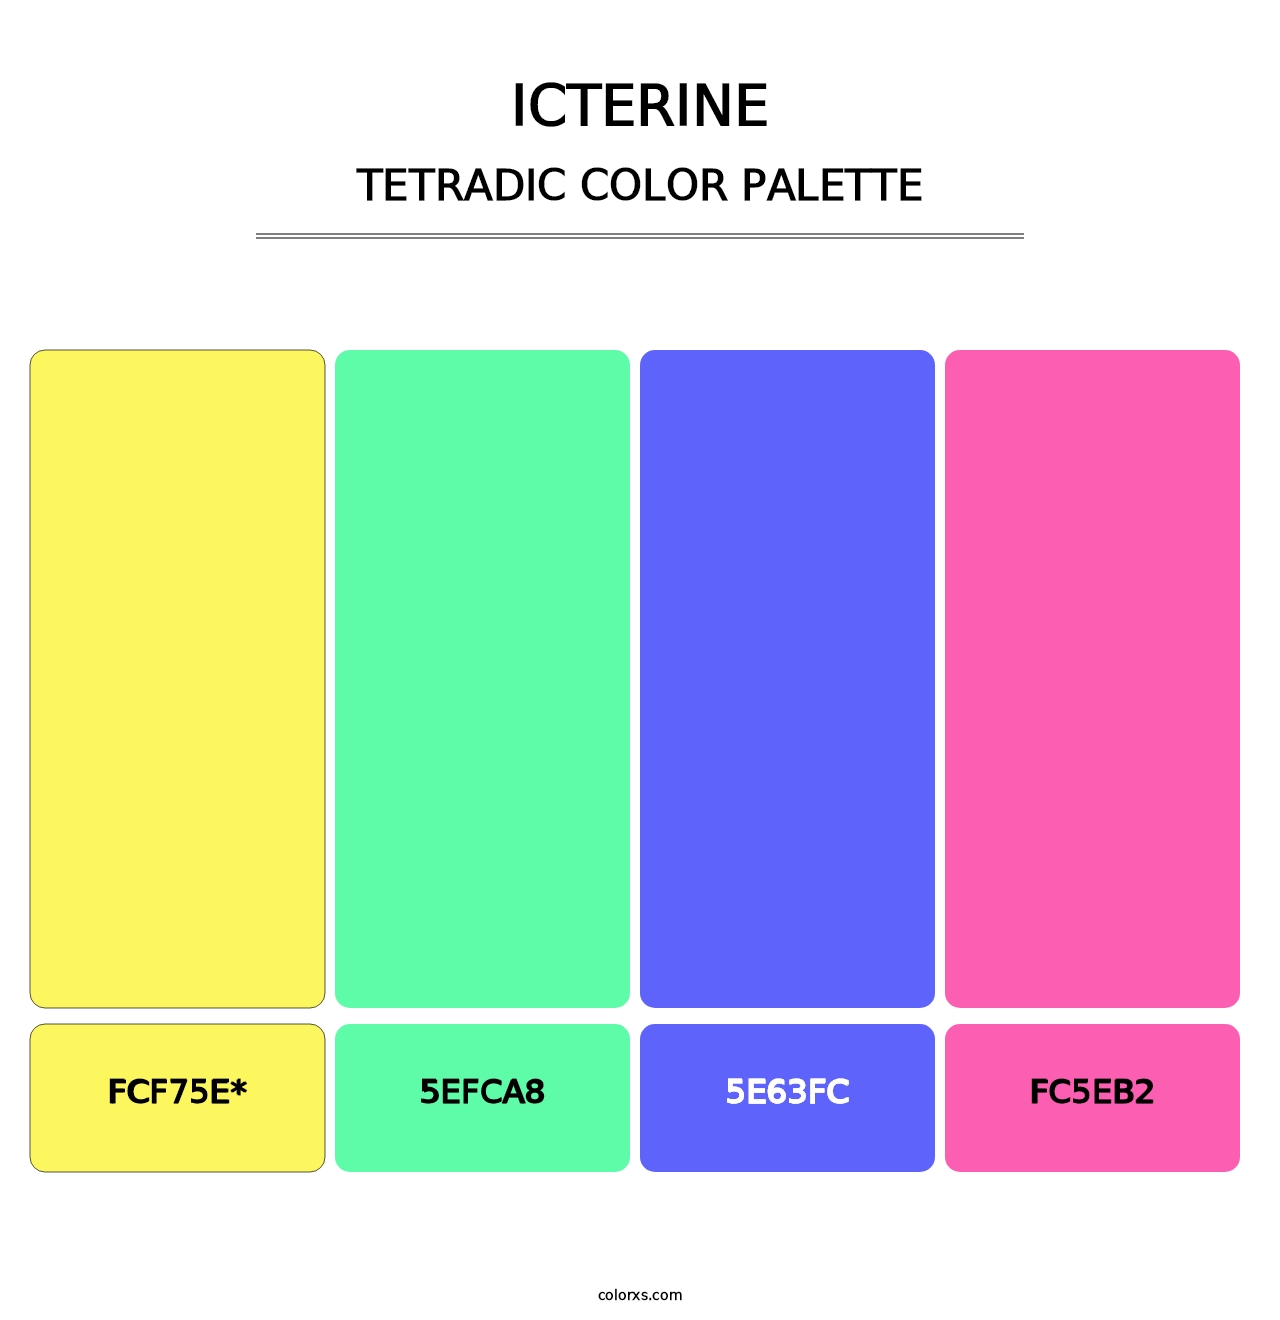 Icterine - Tetradic Color Palette